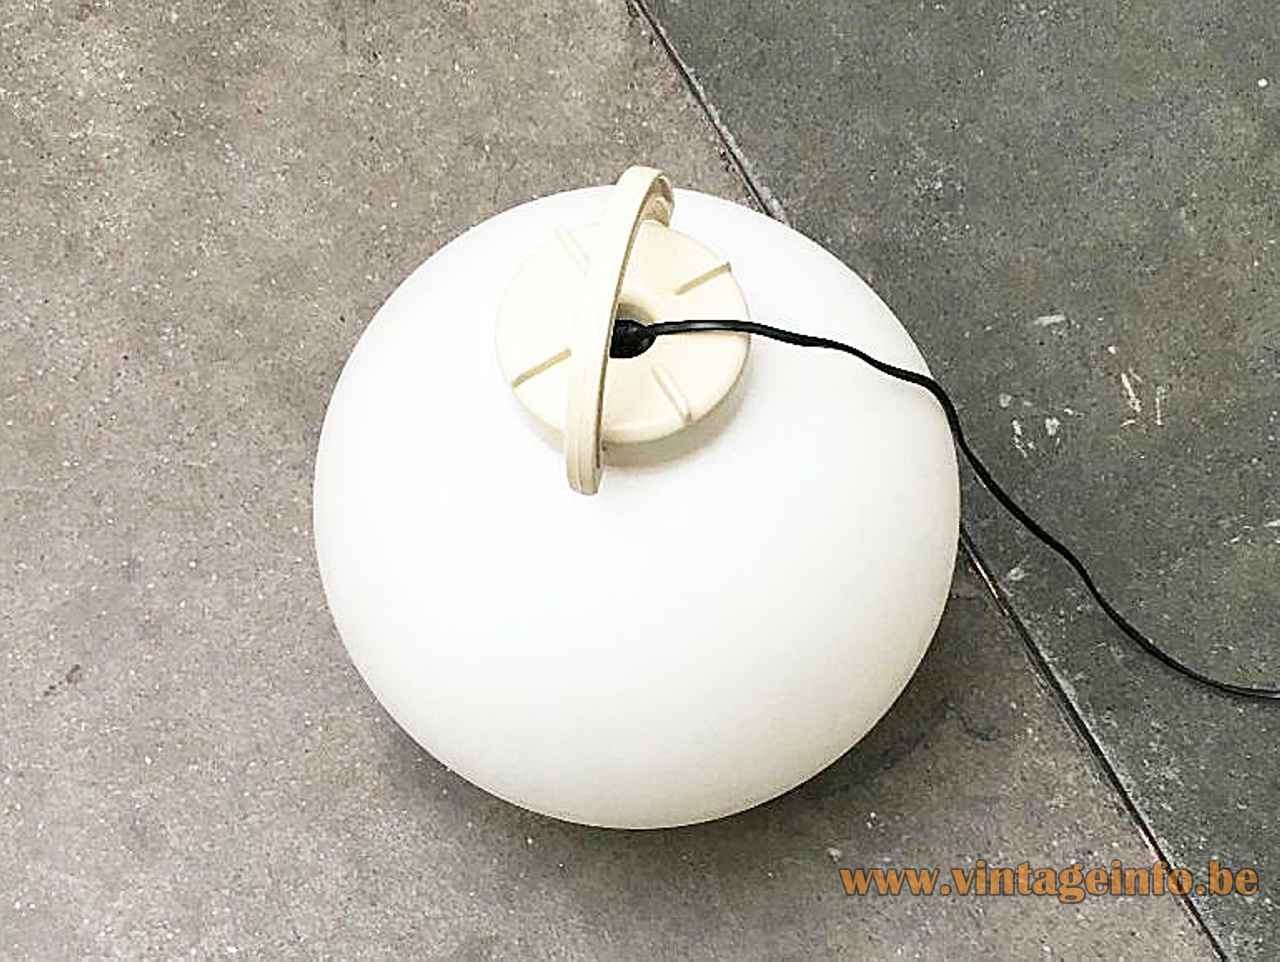 Valenti Tama floor lamp white plastic globe lampshade & handle design: Isao Hosoe 1970s 1980s top view